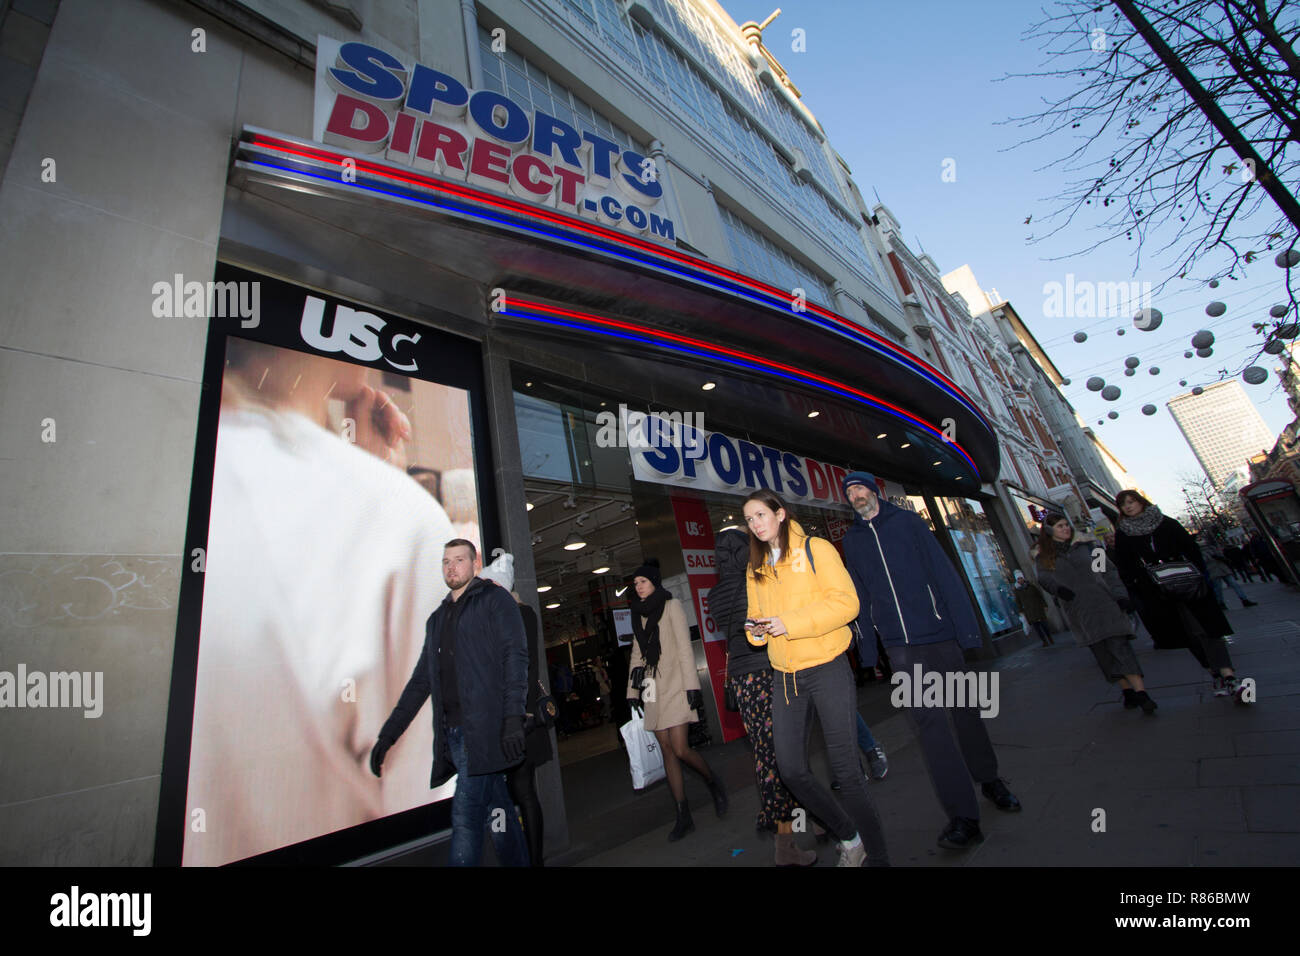 Sports direct retail shop Oxford street Stock Photo